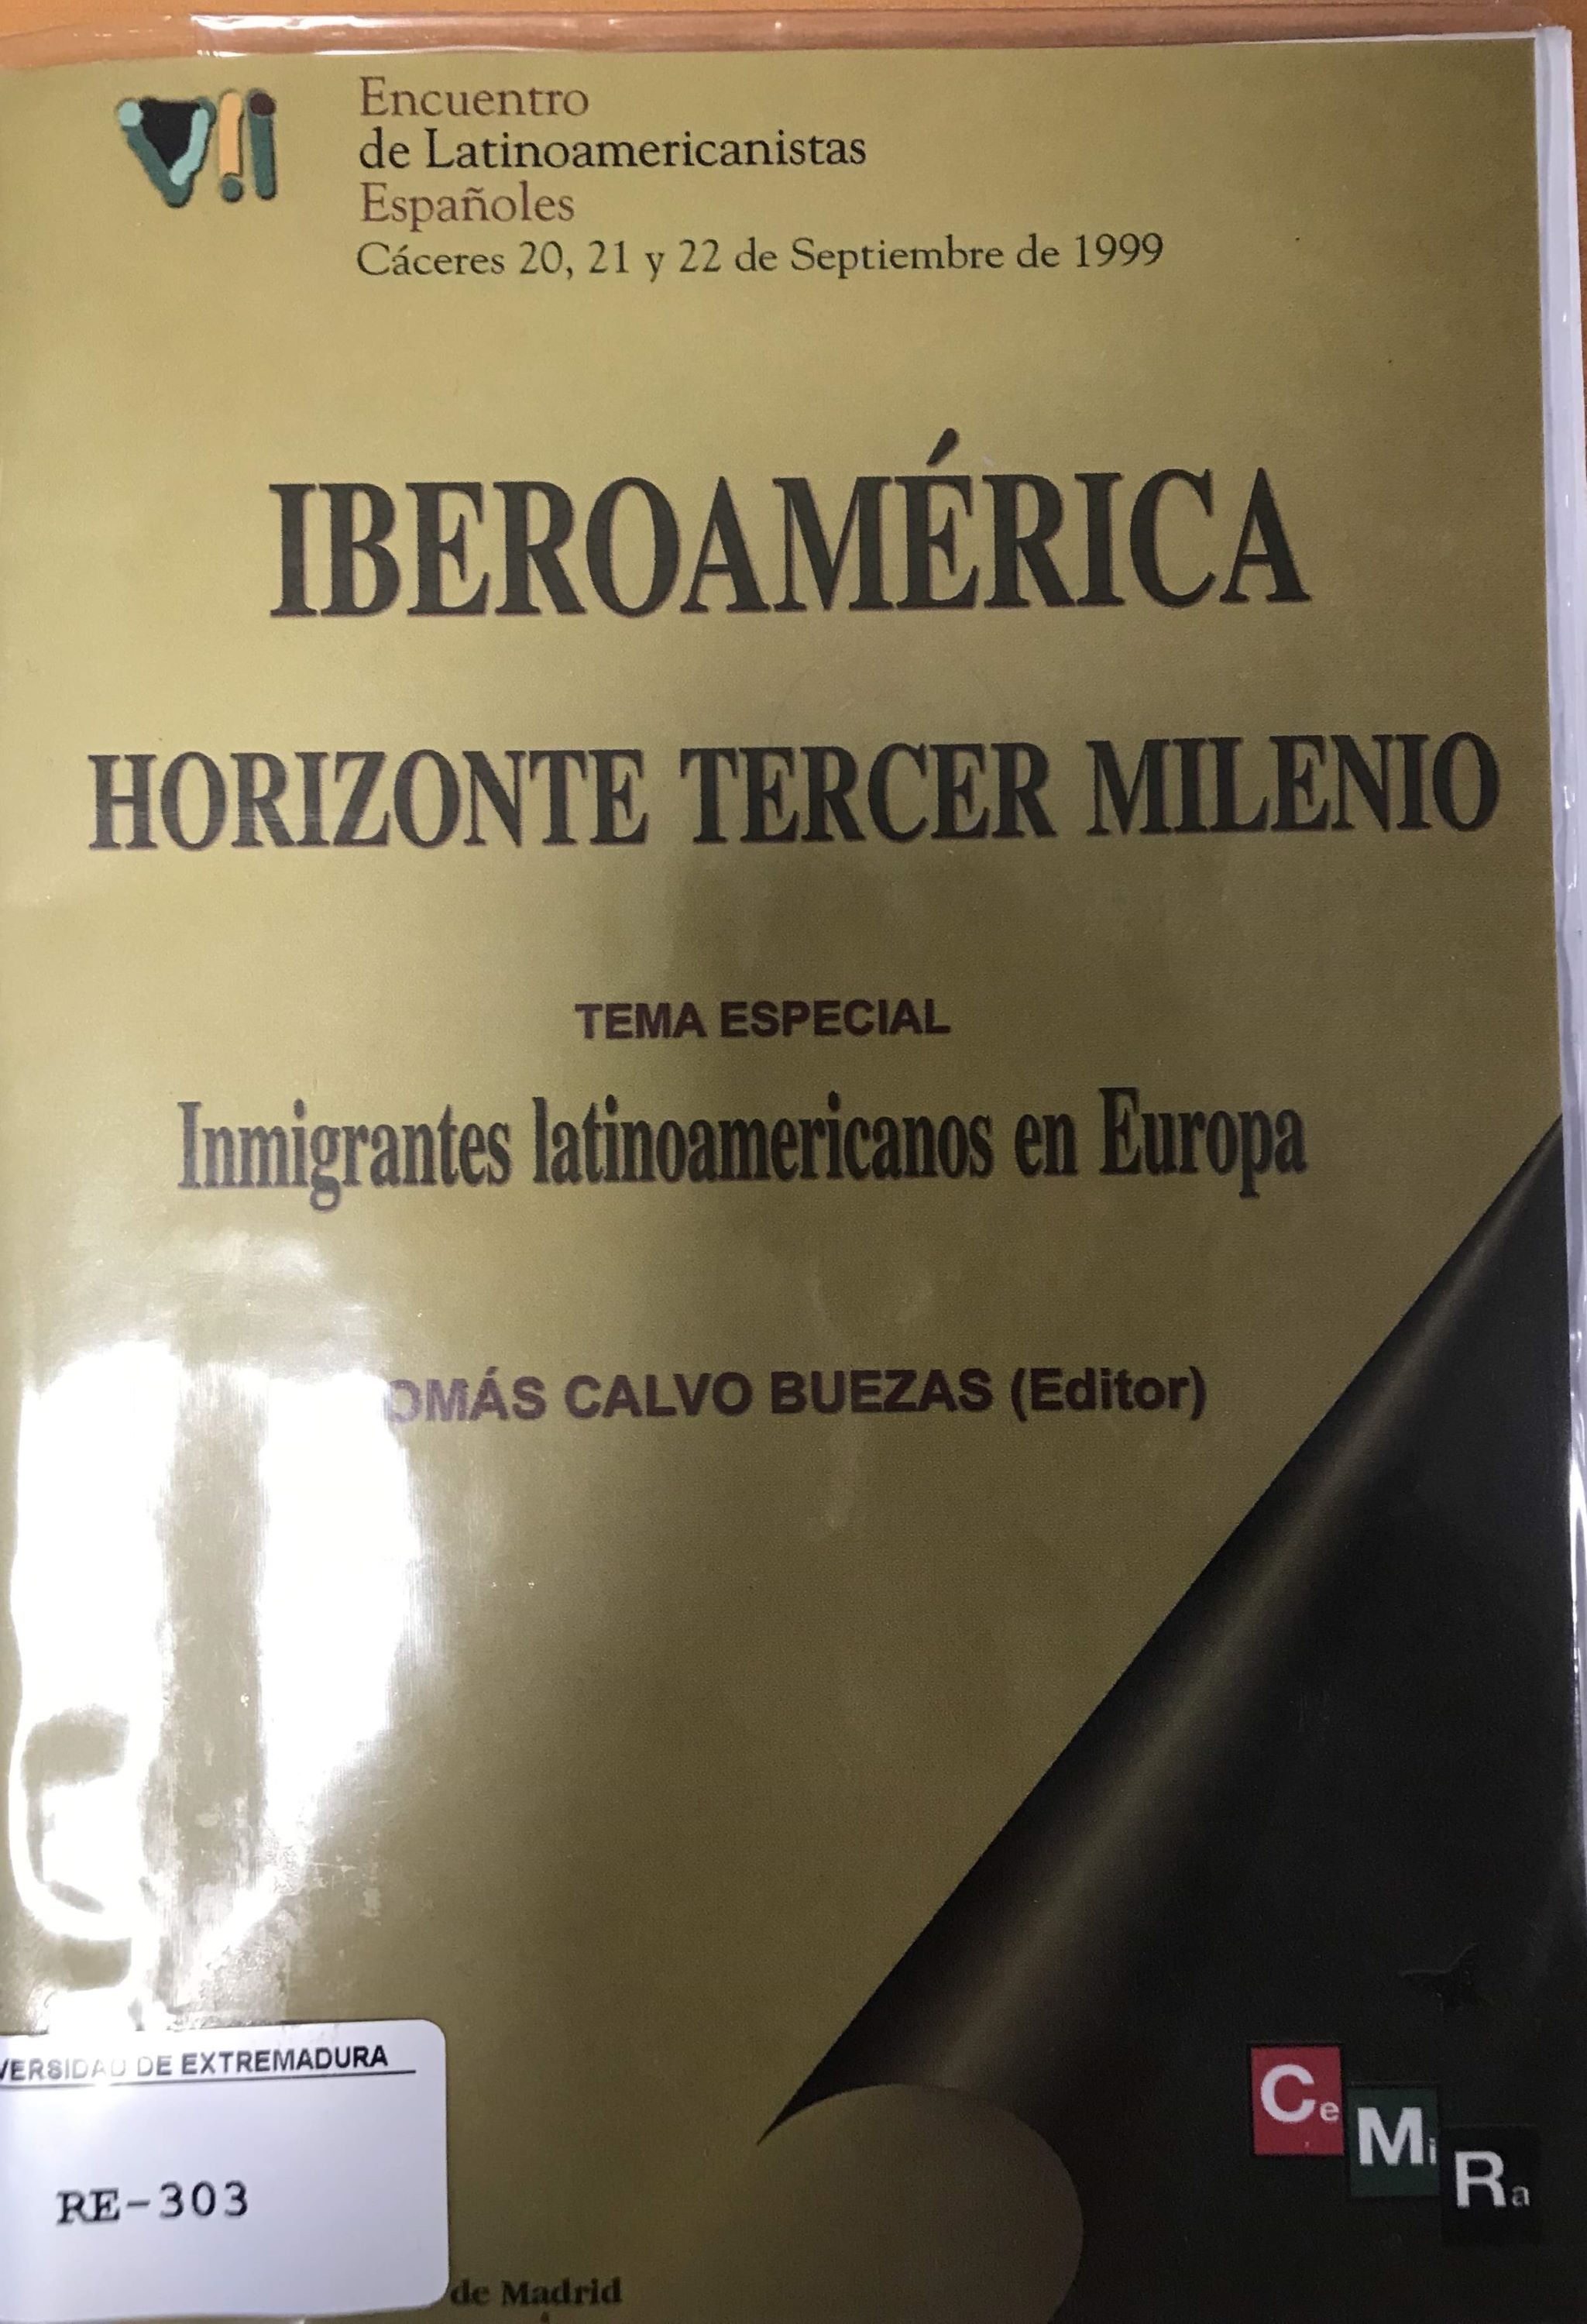 Imagen de portada del libro Iberoamérica Horizonte Tercer Milenio